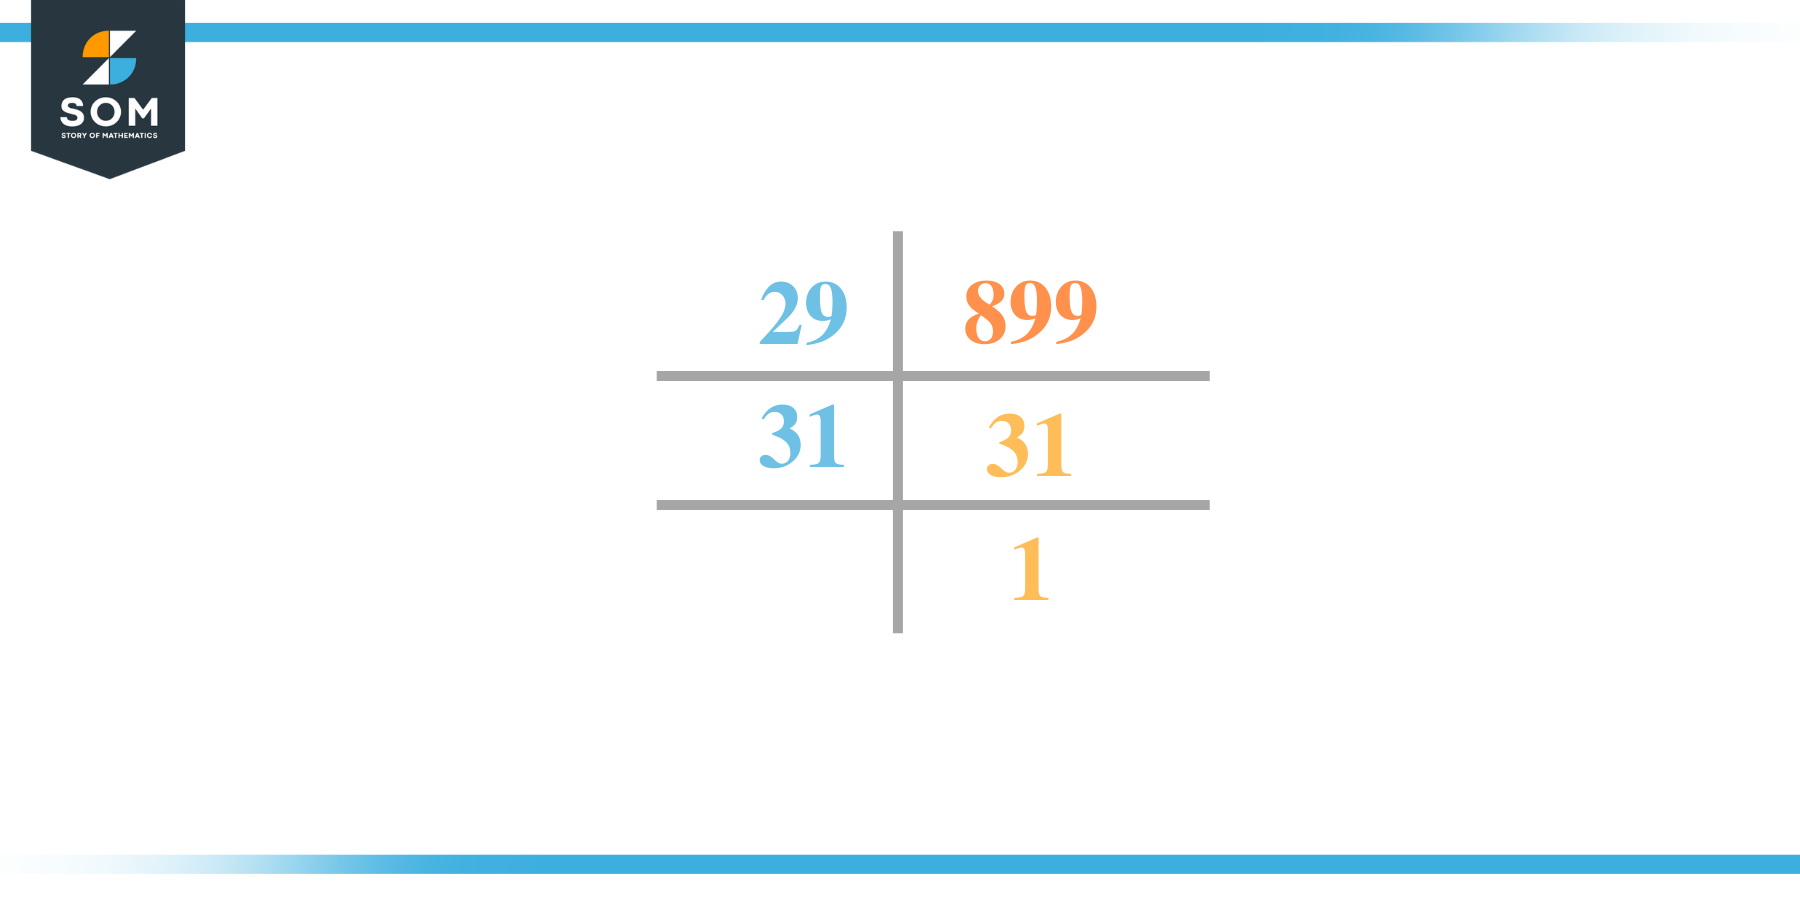 Prime factorization of 899